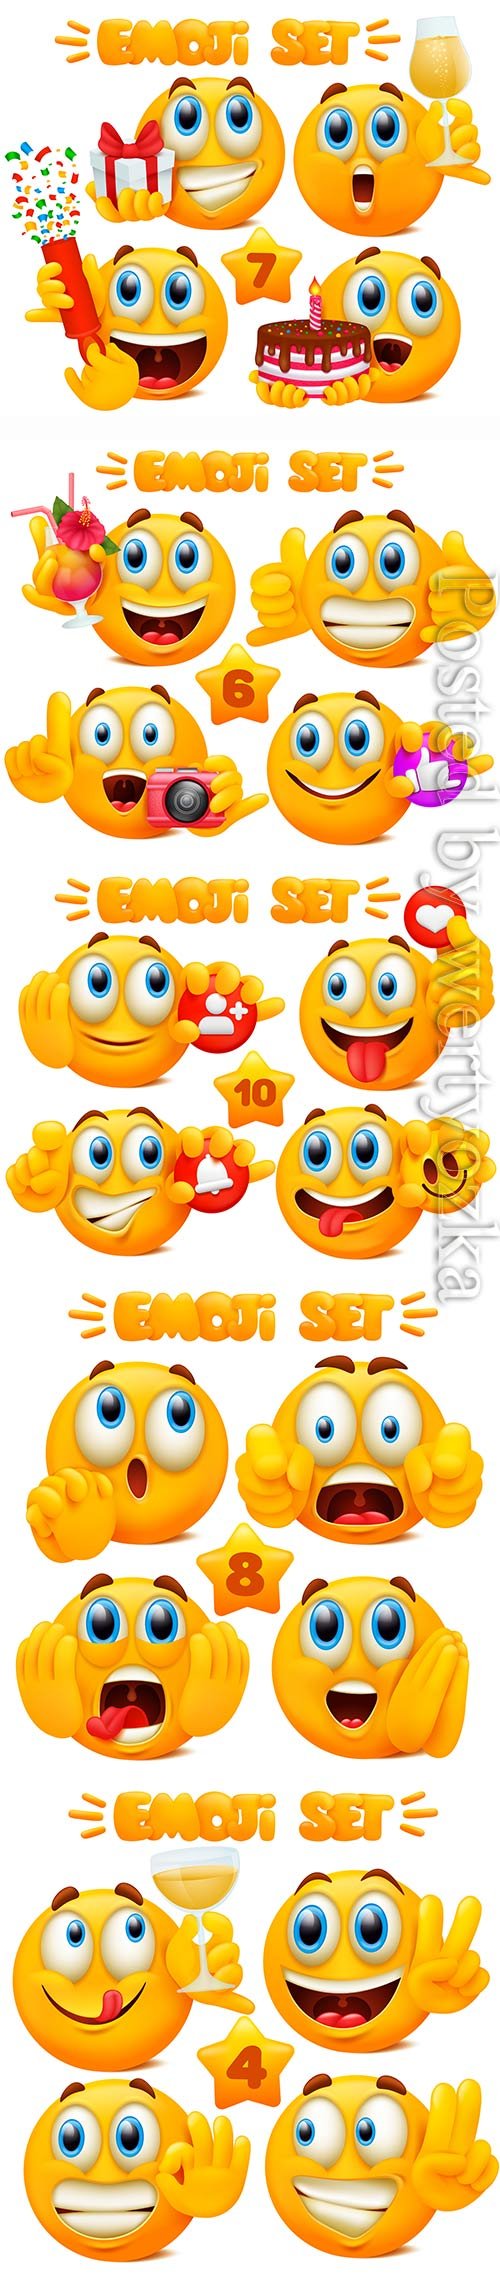 Yellow emoji cartoon characters in glossy 3d